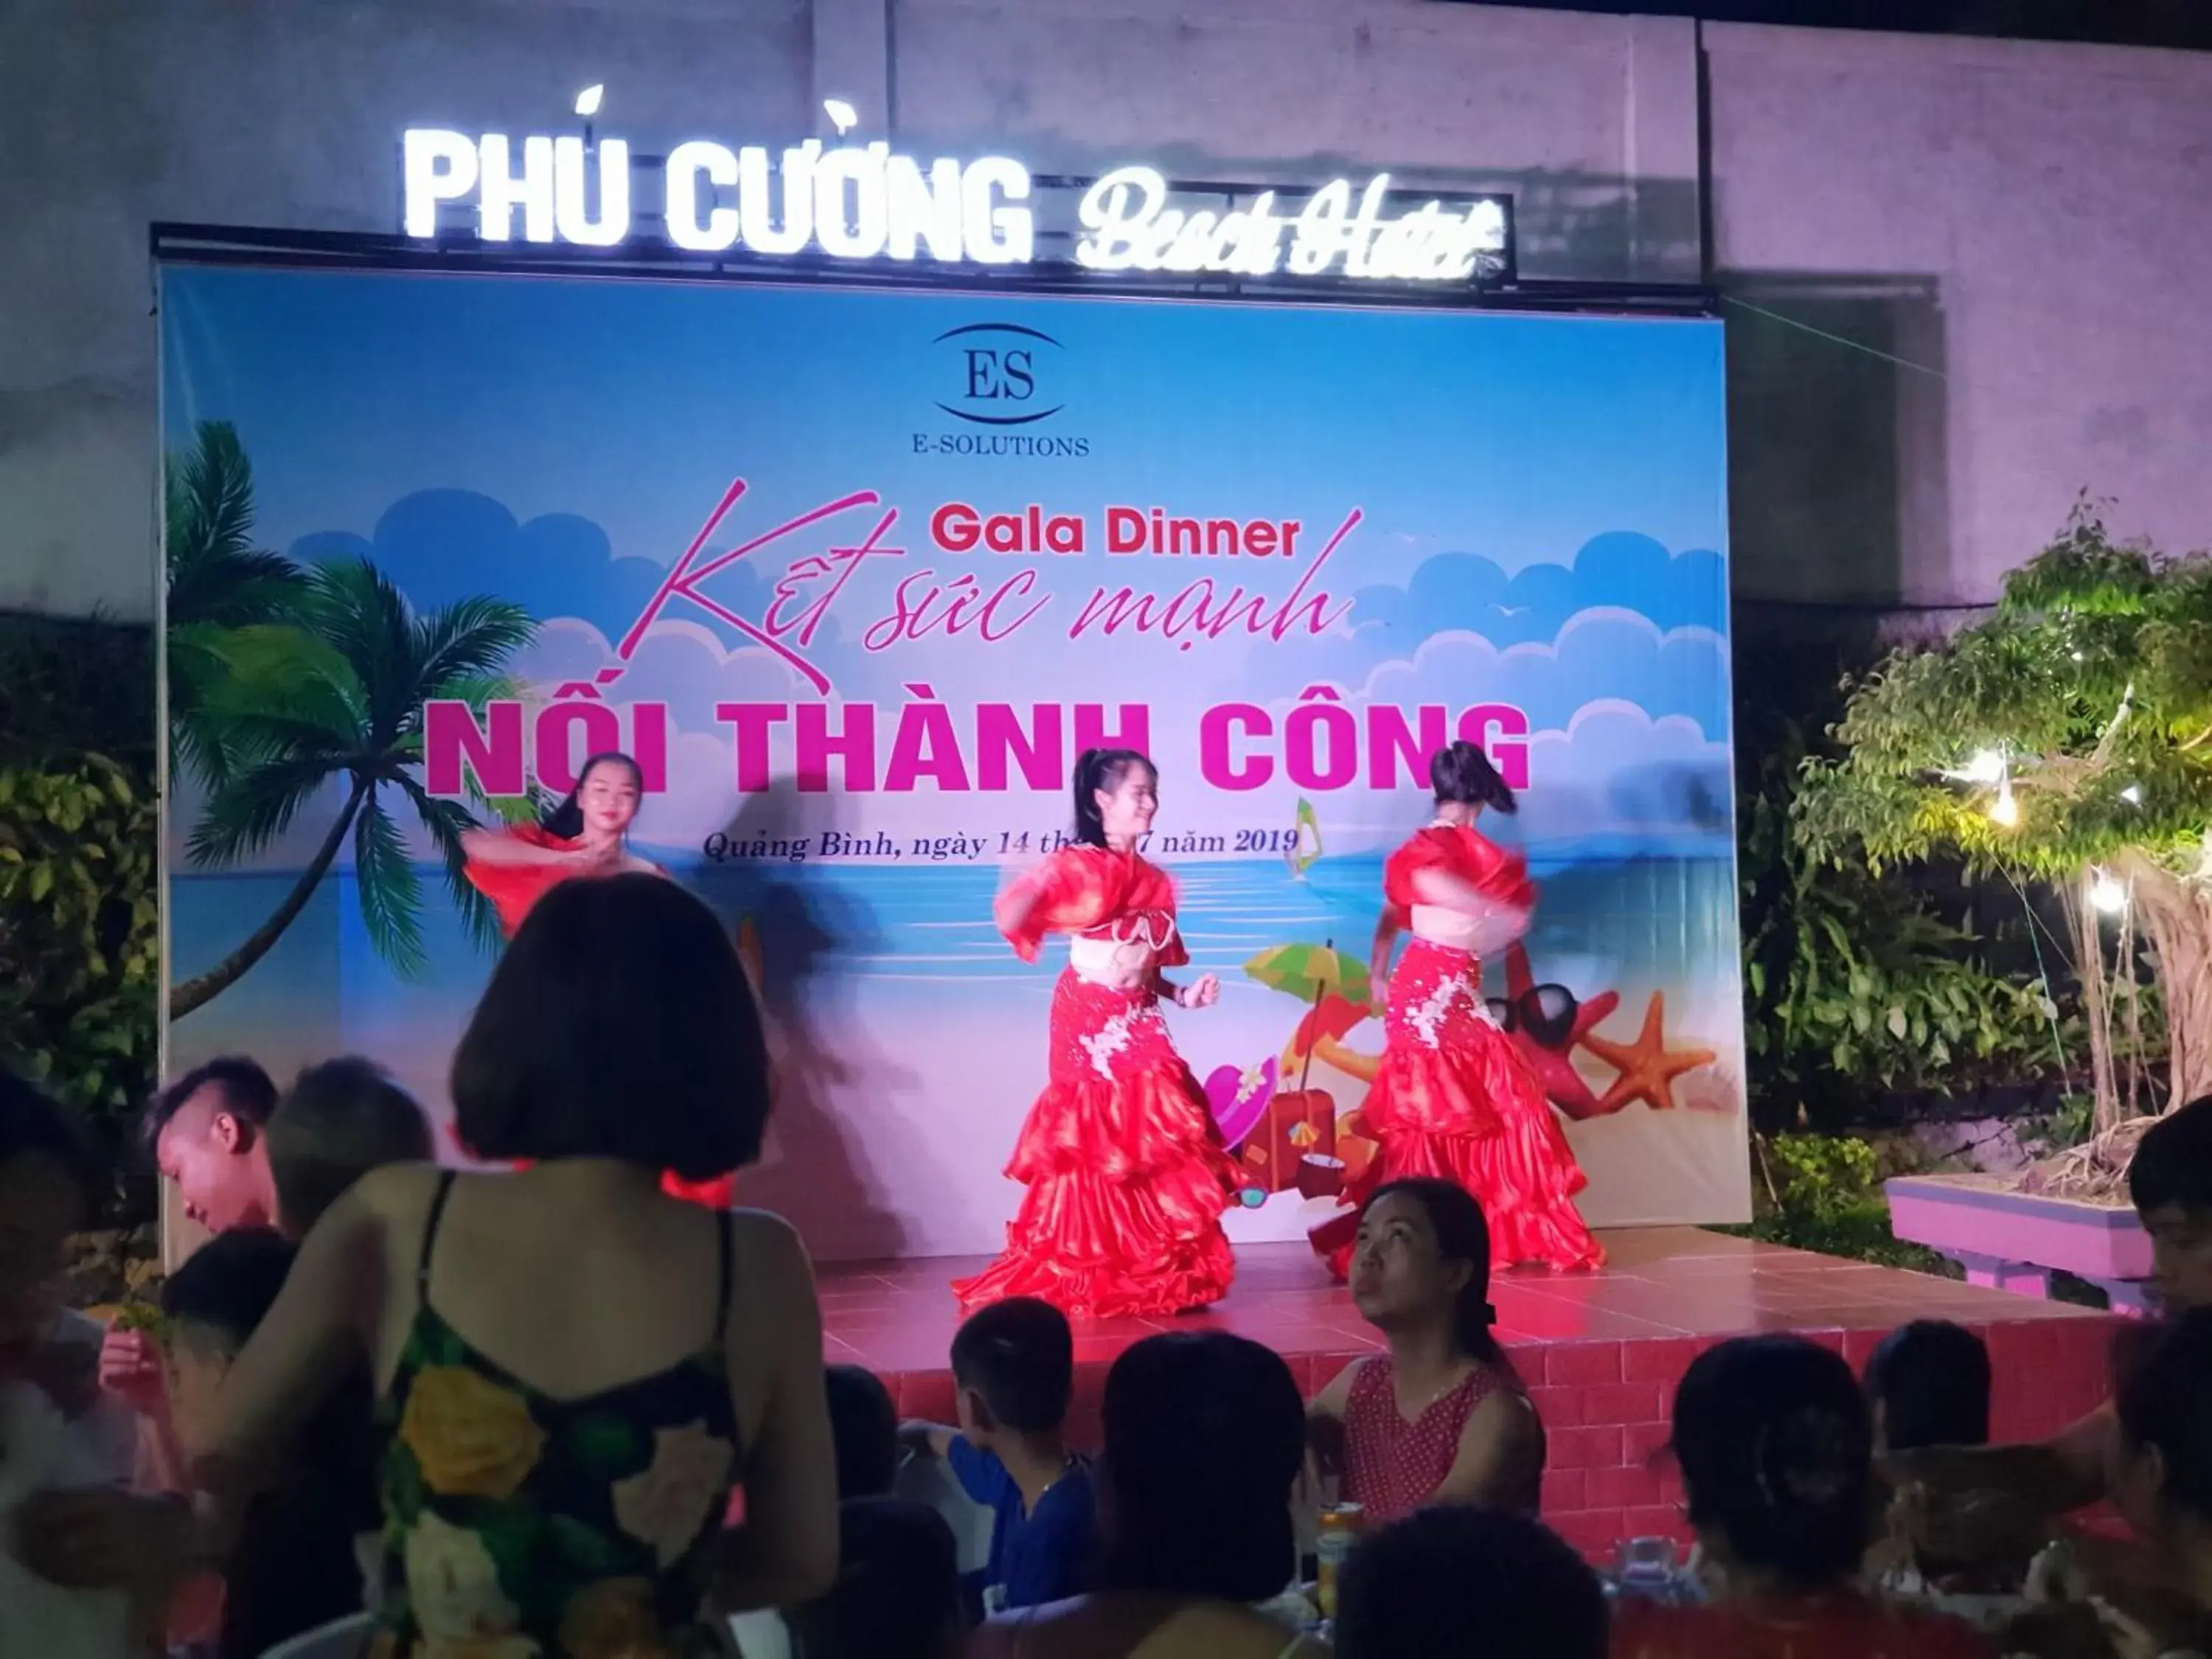 Activities in Phu Cuong Beach Hotel